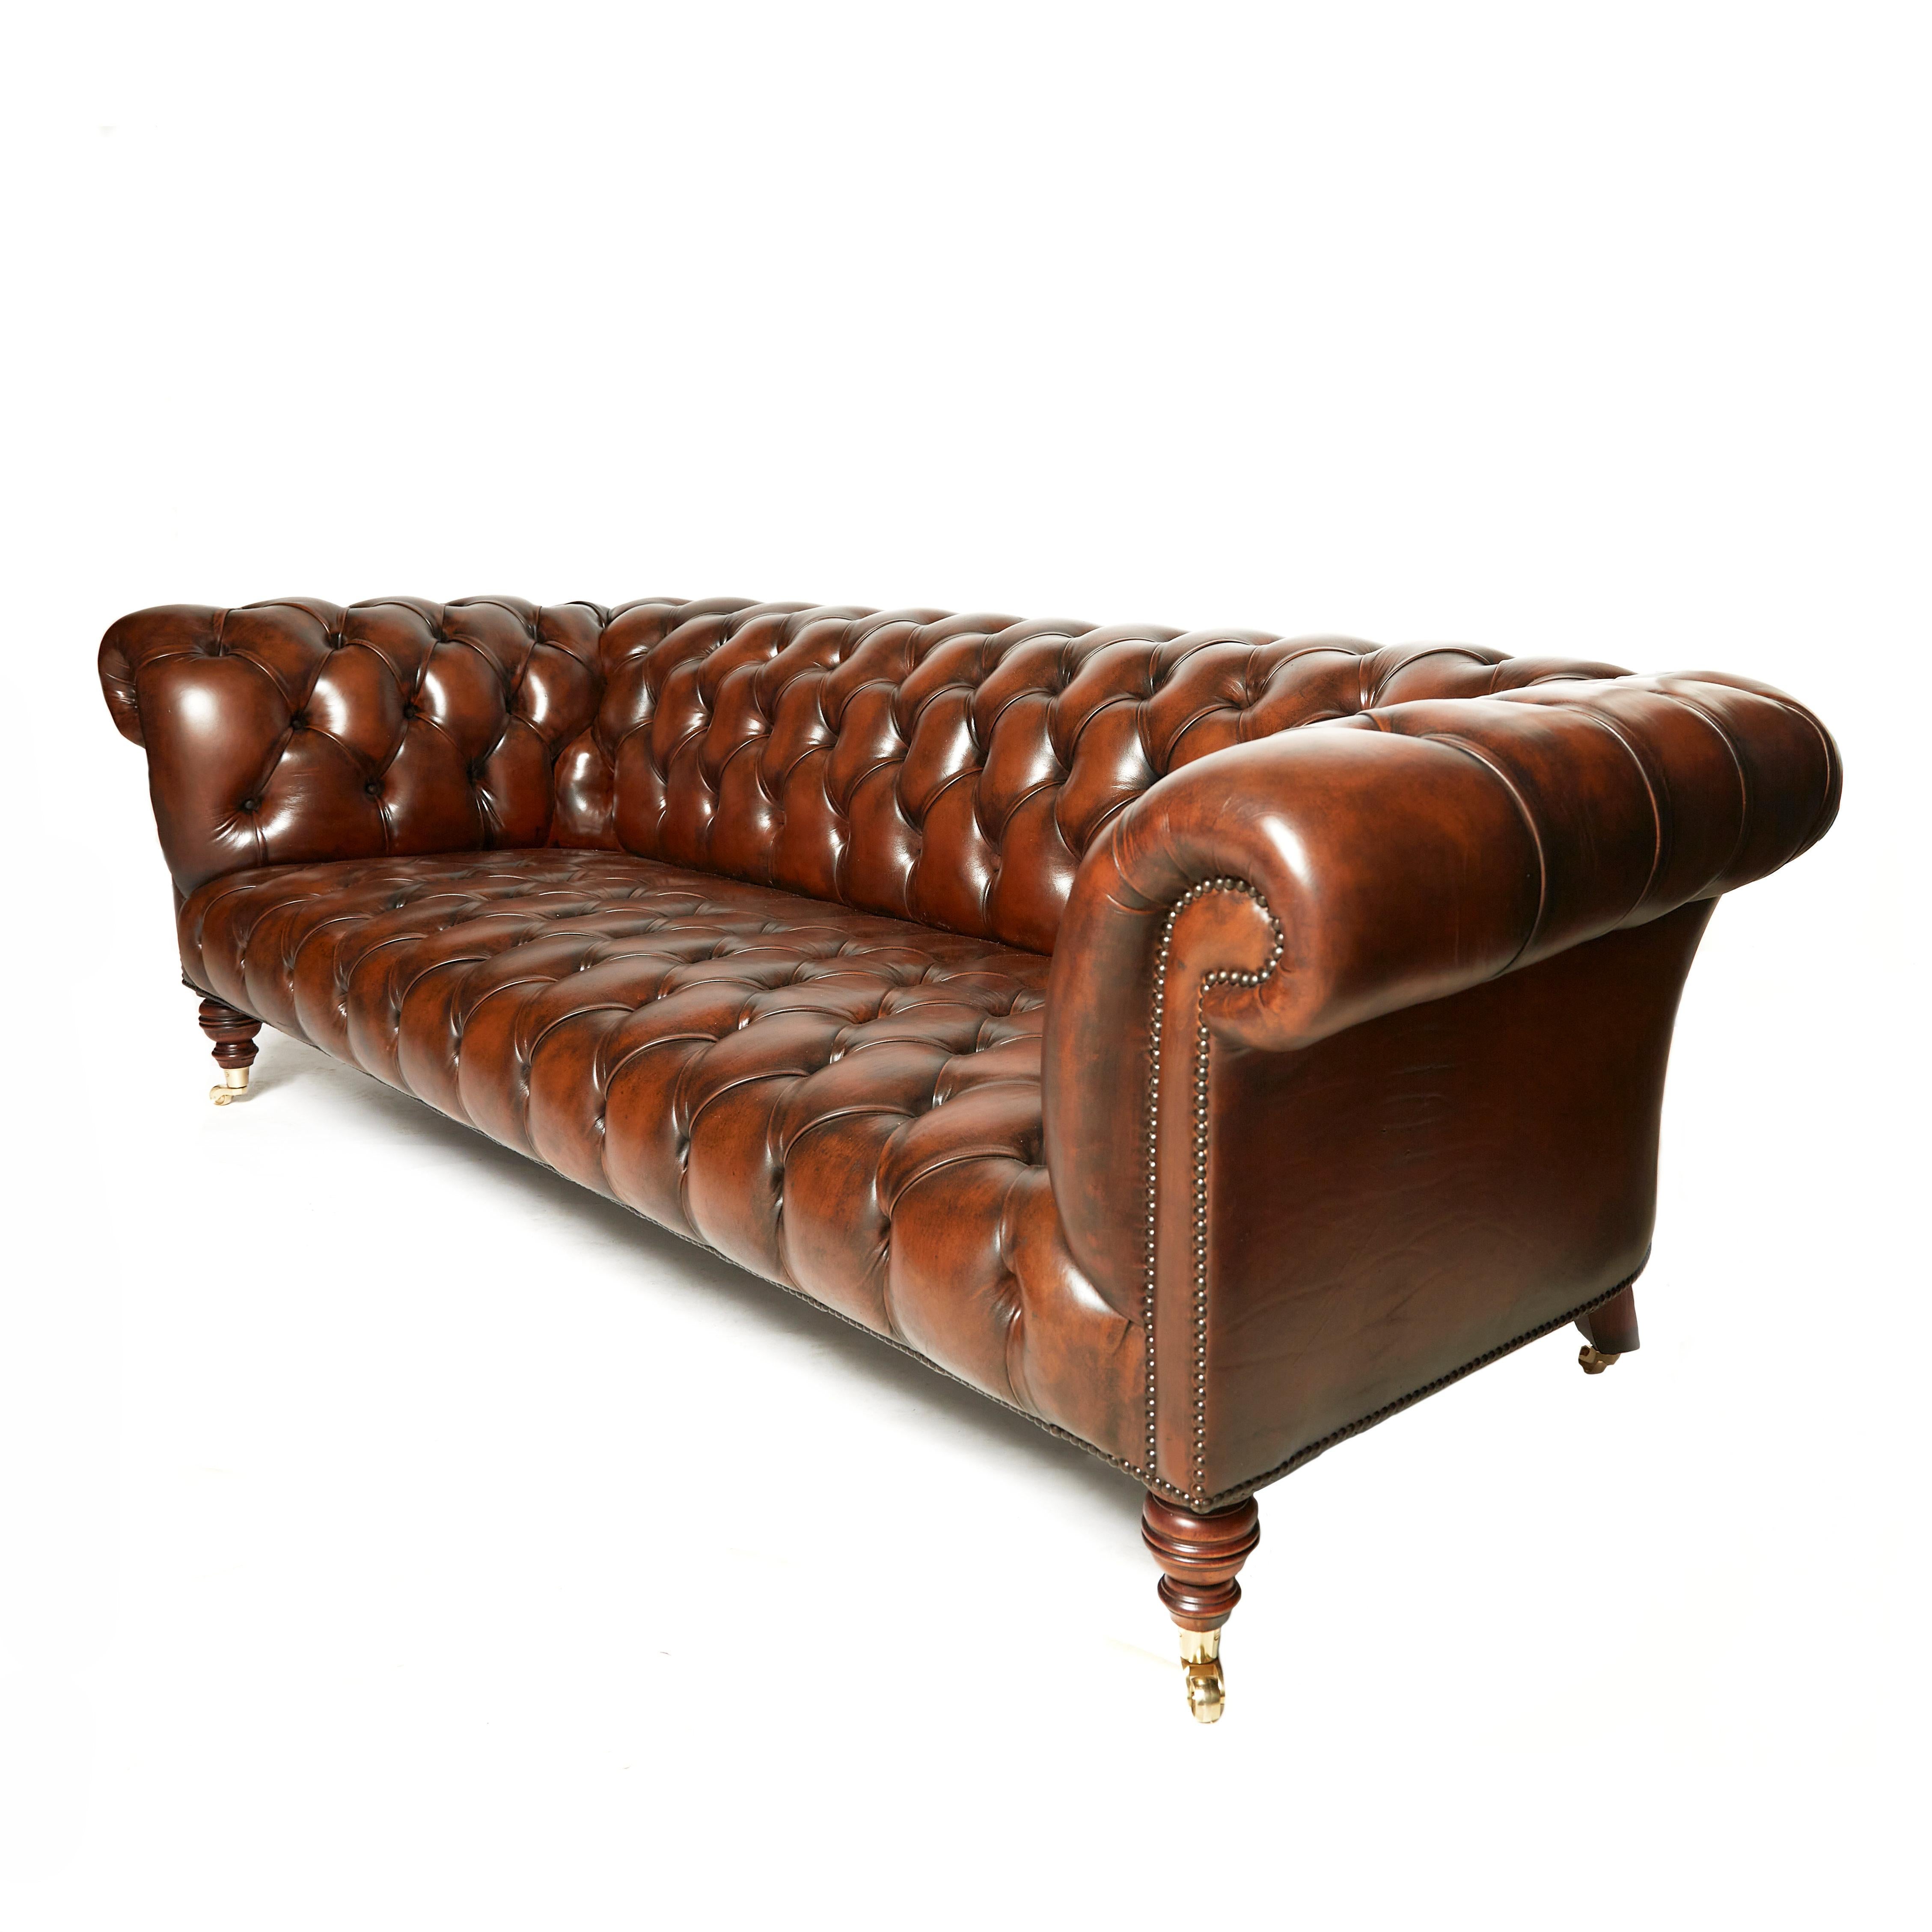 Superb Quality Classic English Chesterfield Sofa 1